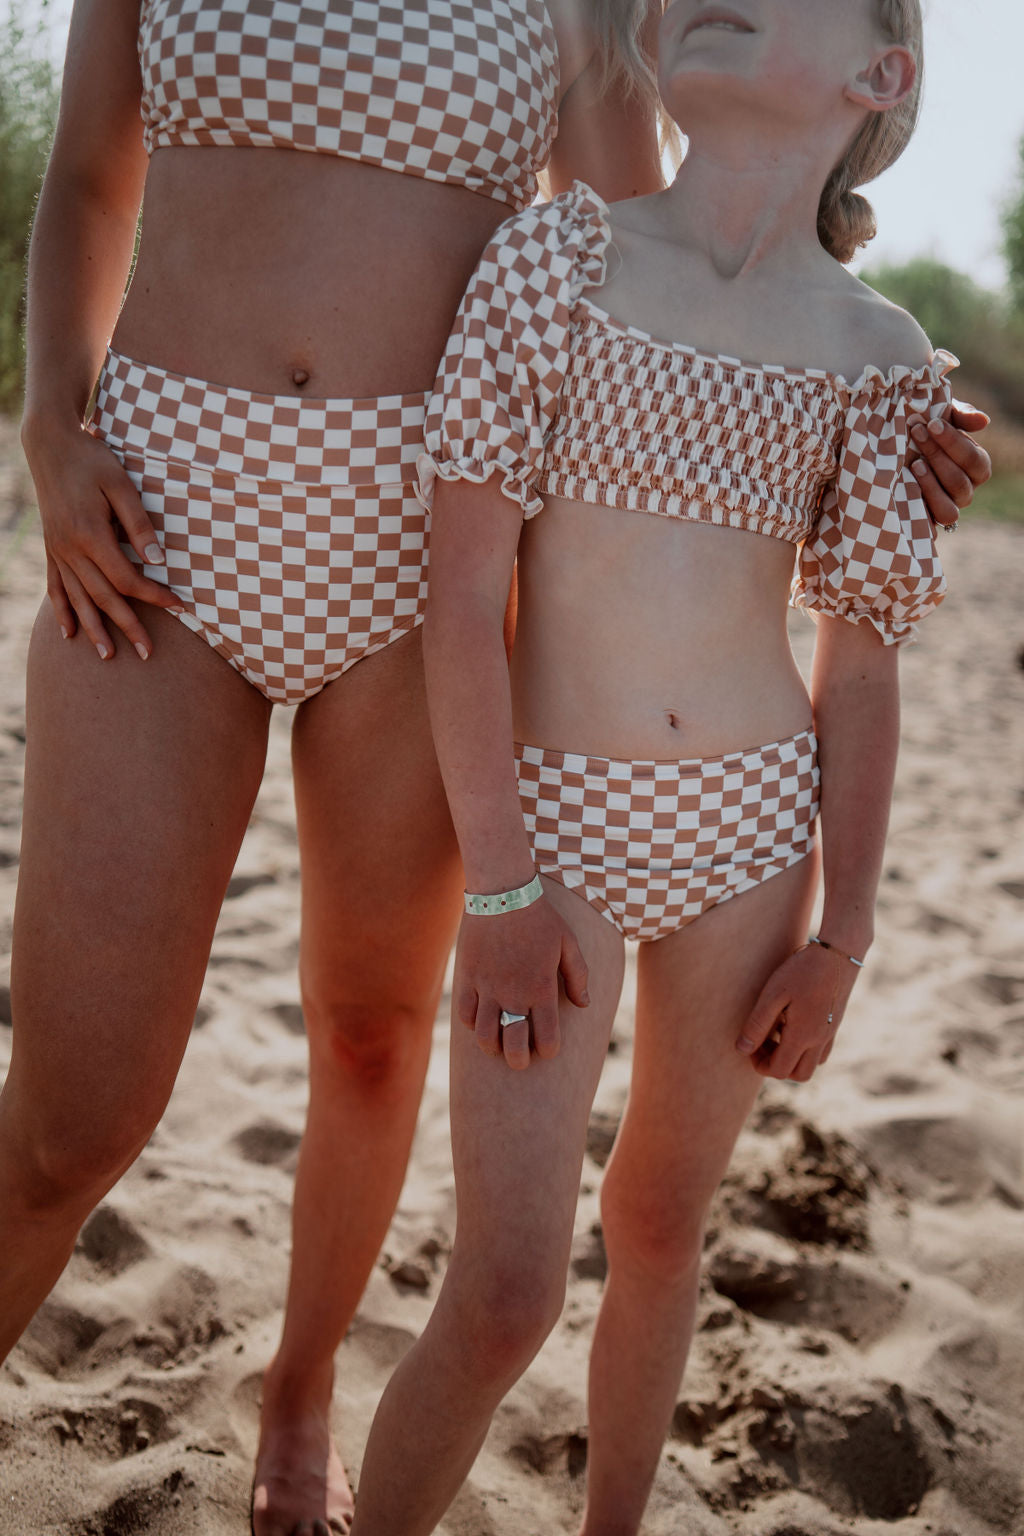 Kids Girls Swimwear Summer Ruffle Crop Top Plaid Briefs Bikini Set Bathing  Suit Swimsuit